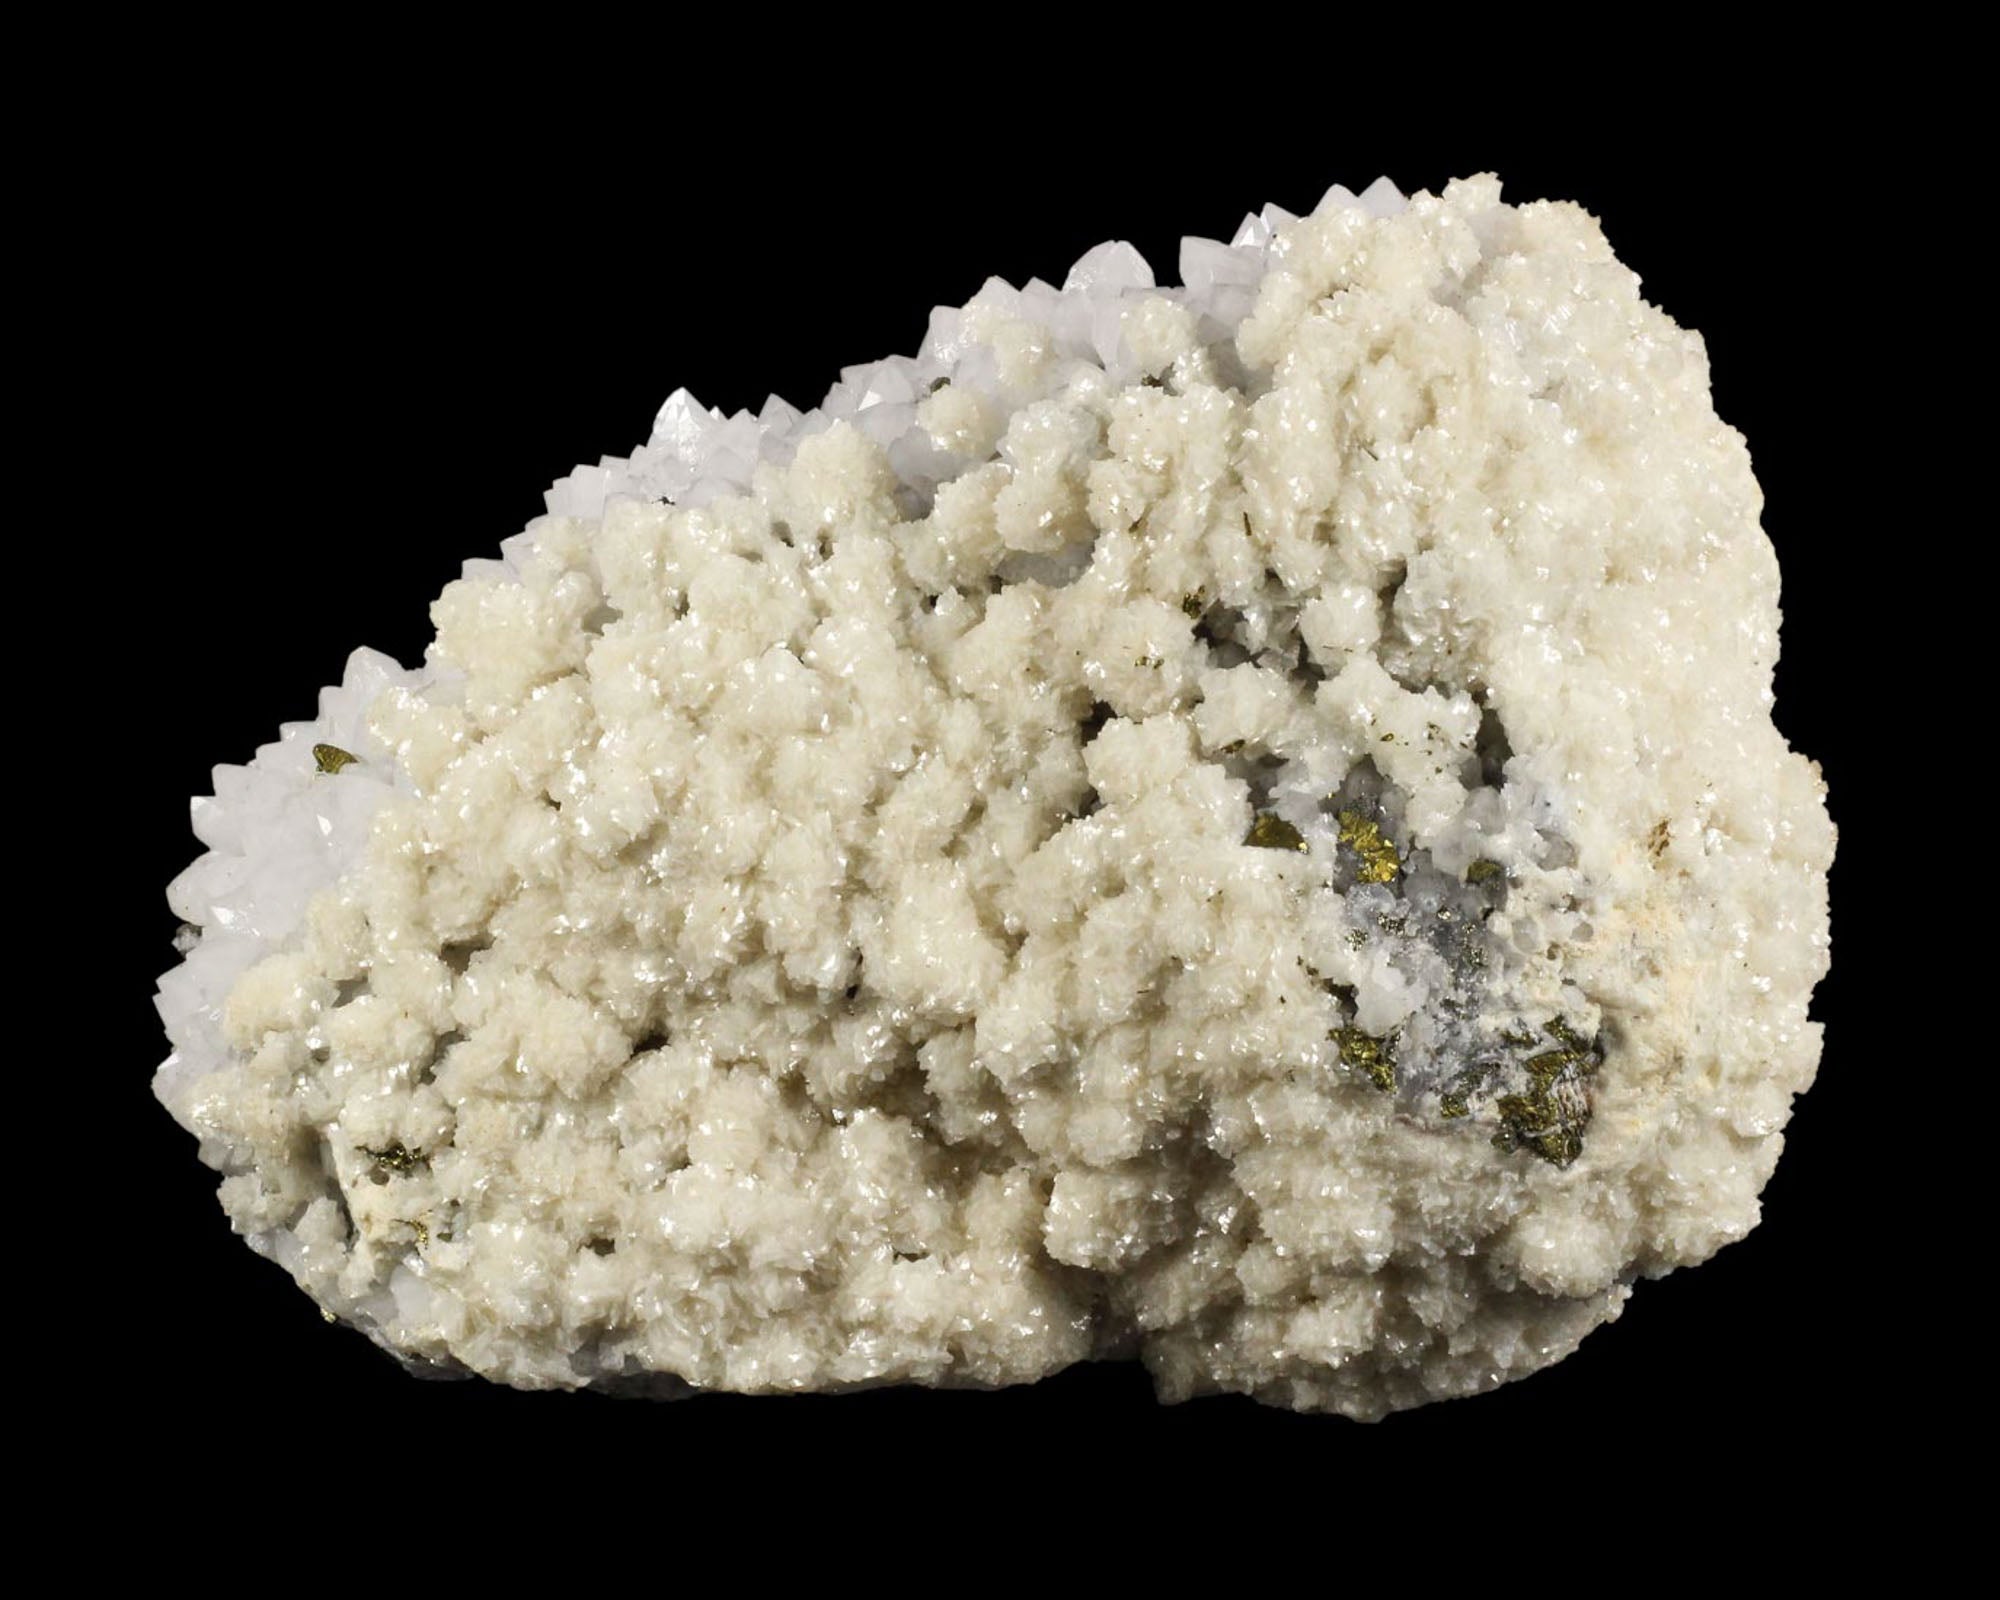 Calcite with Chalcopyrite